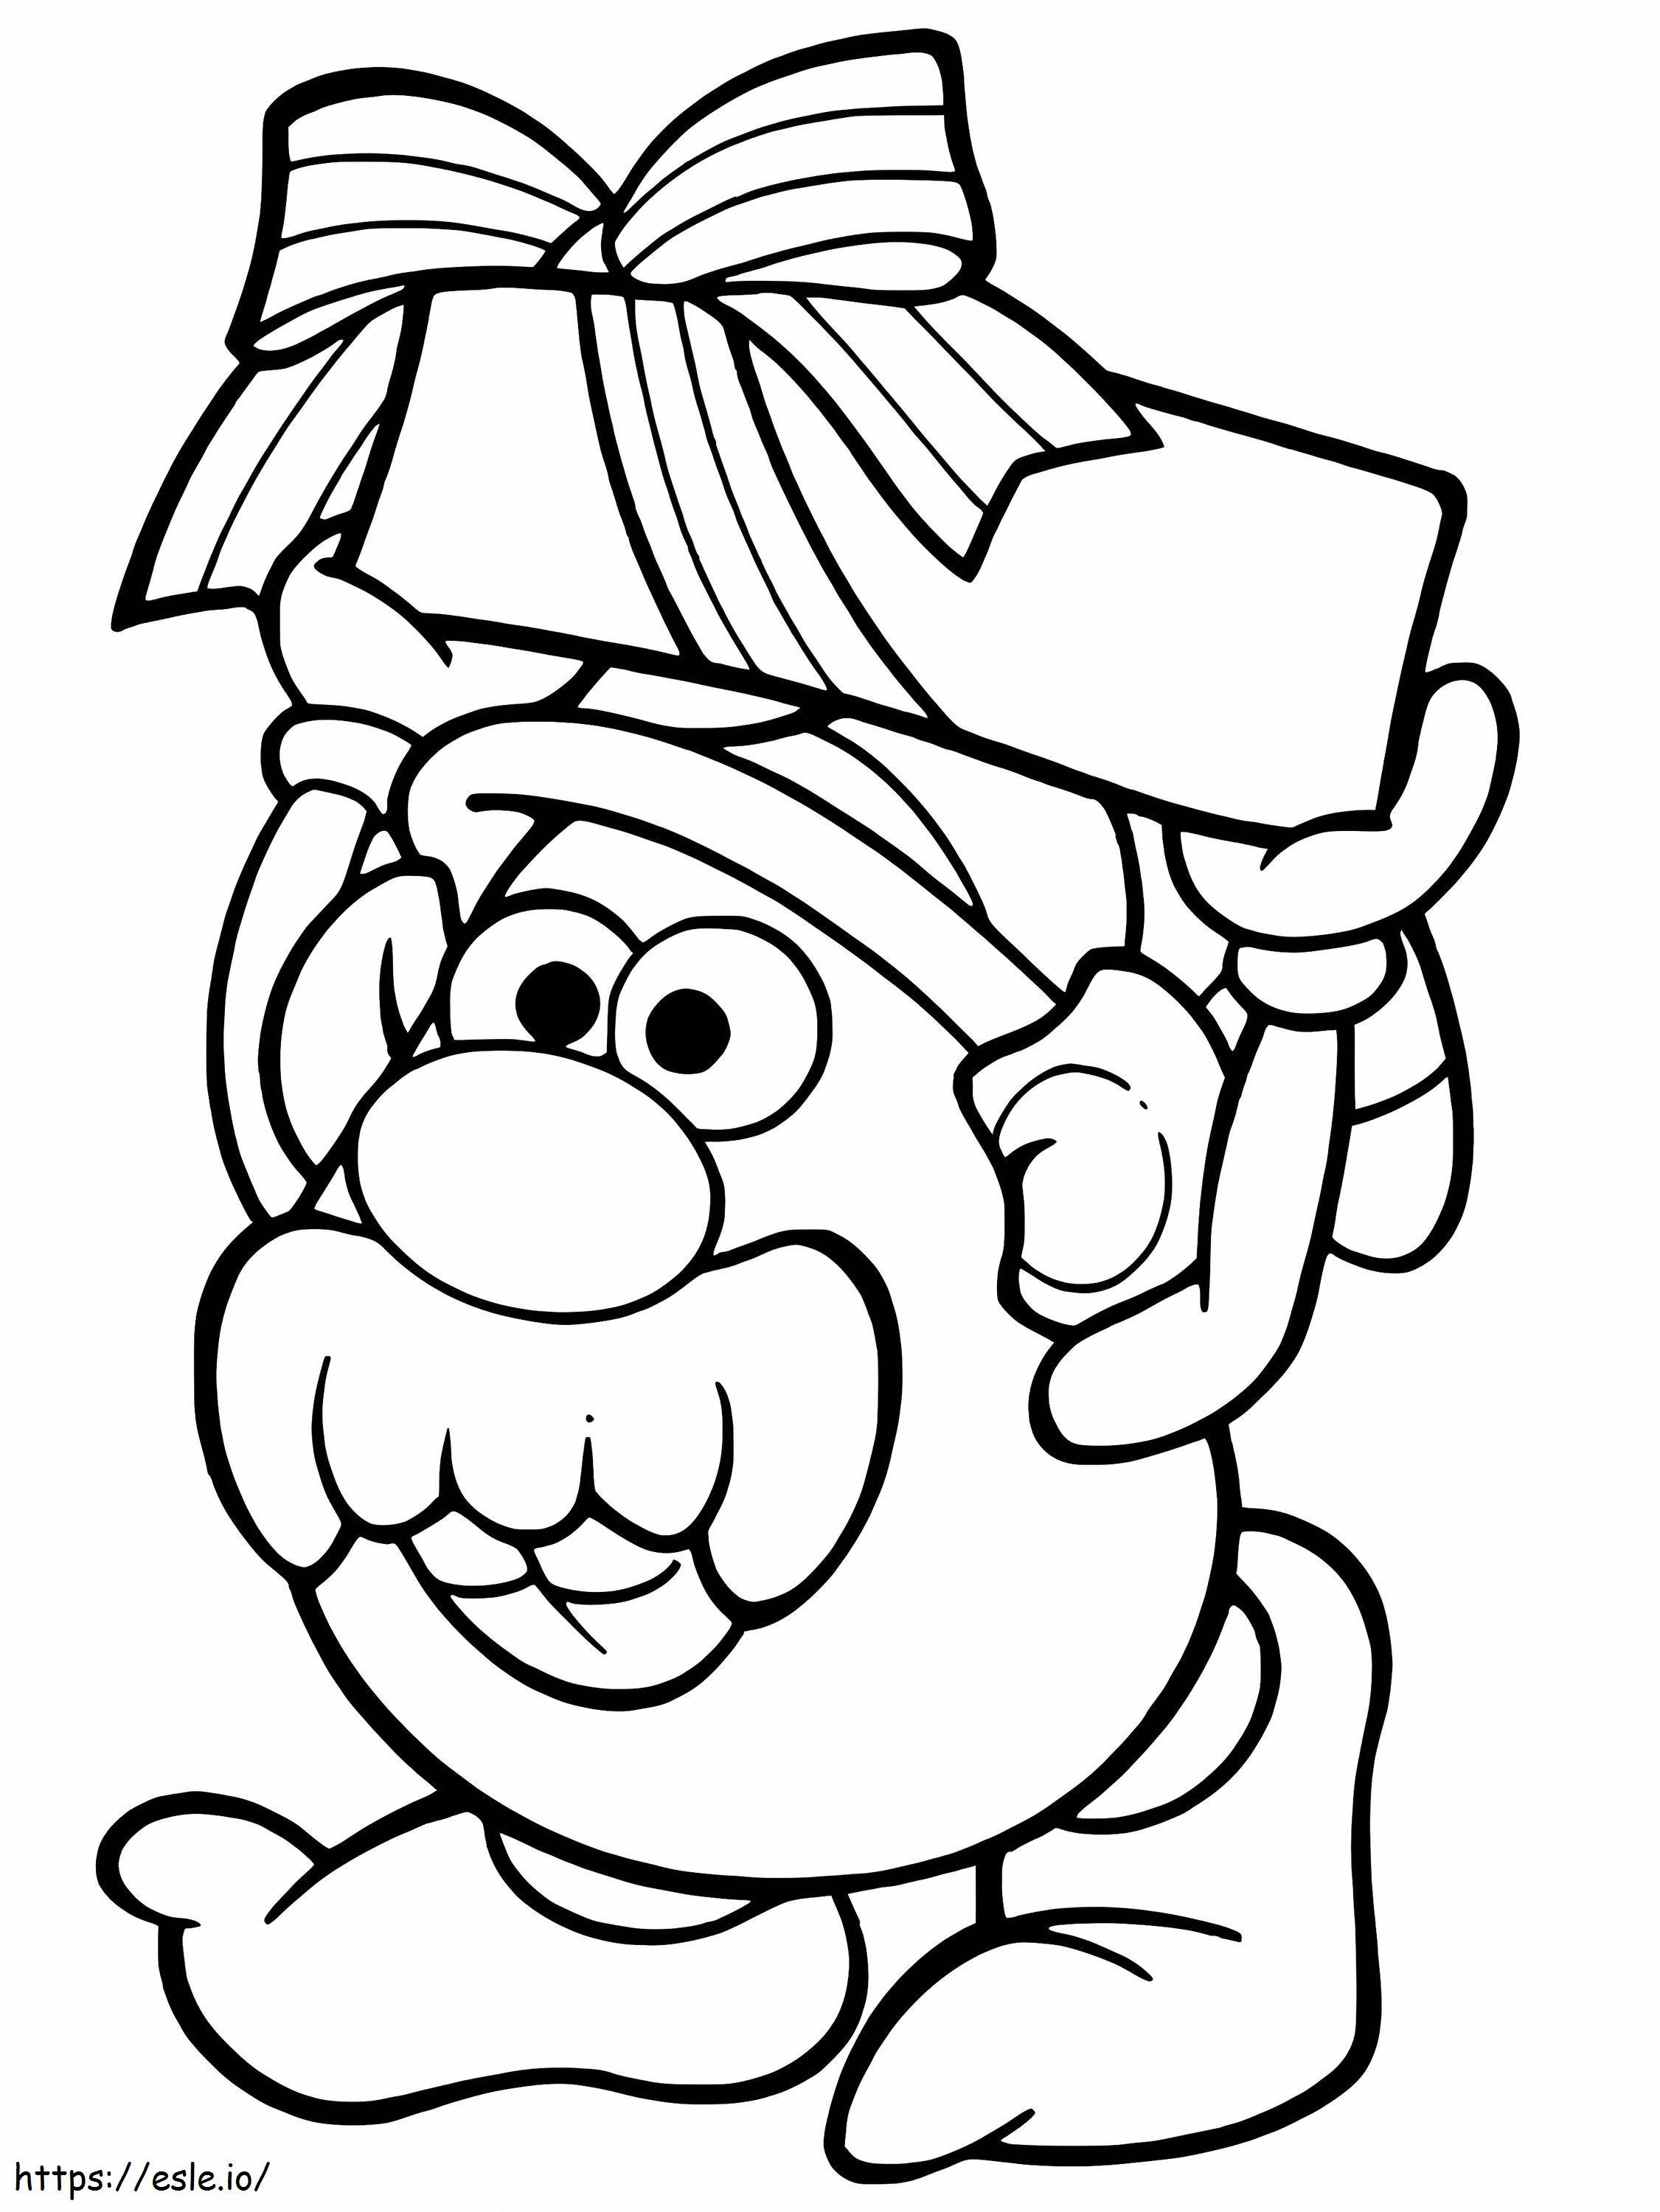 Printable Mr. Potato Head coloring page